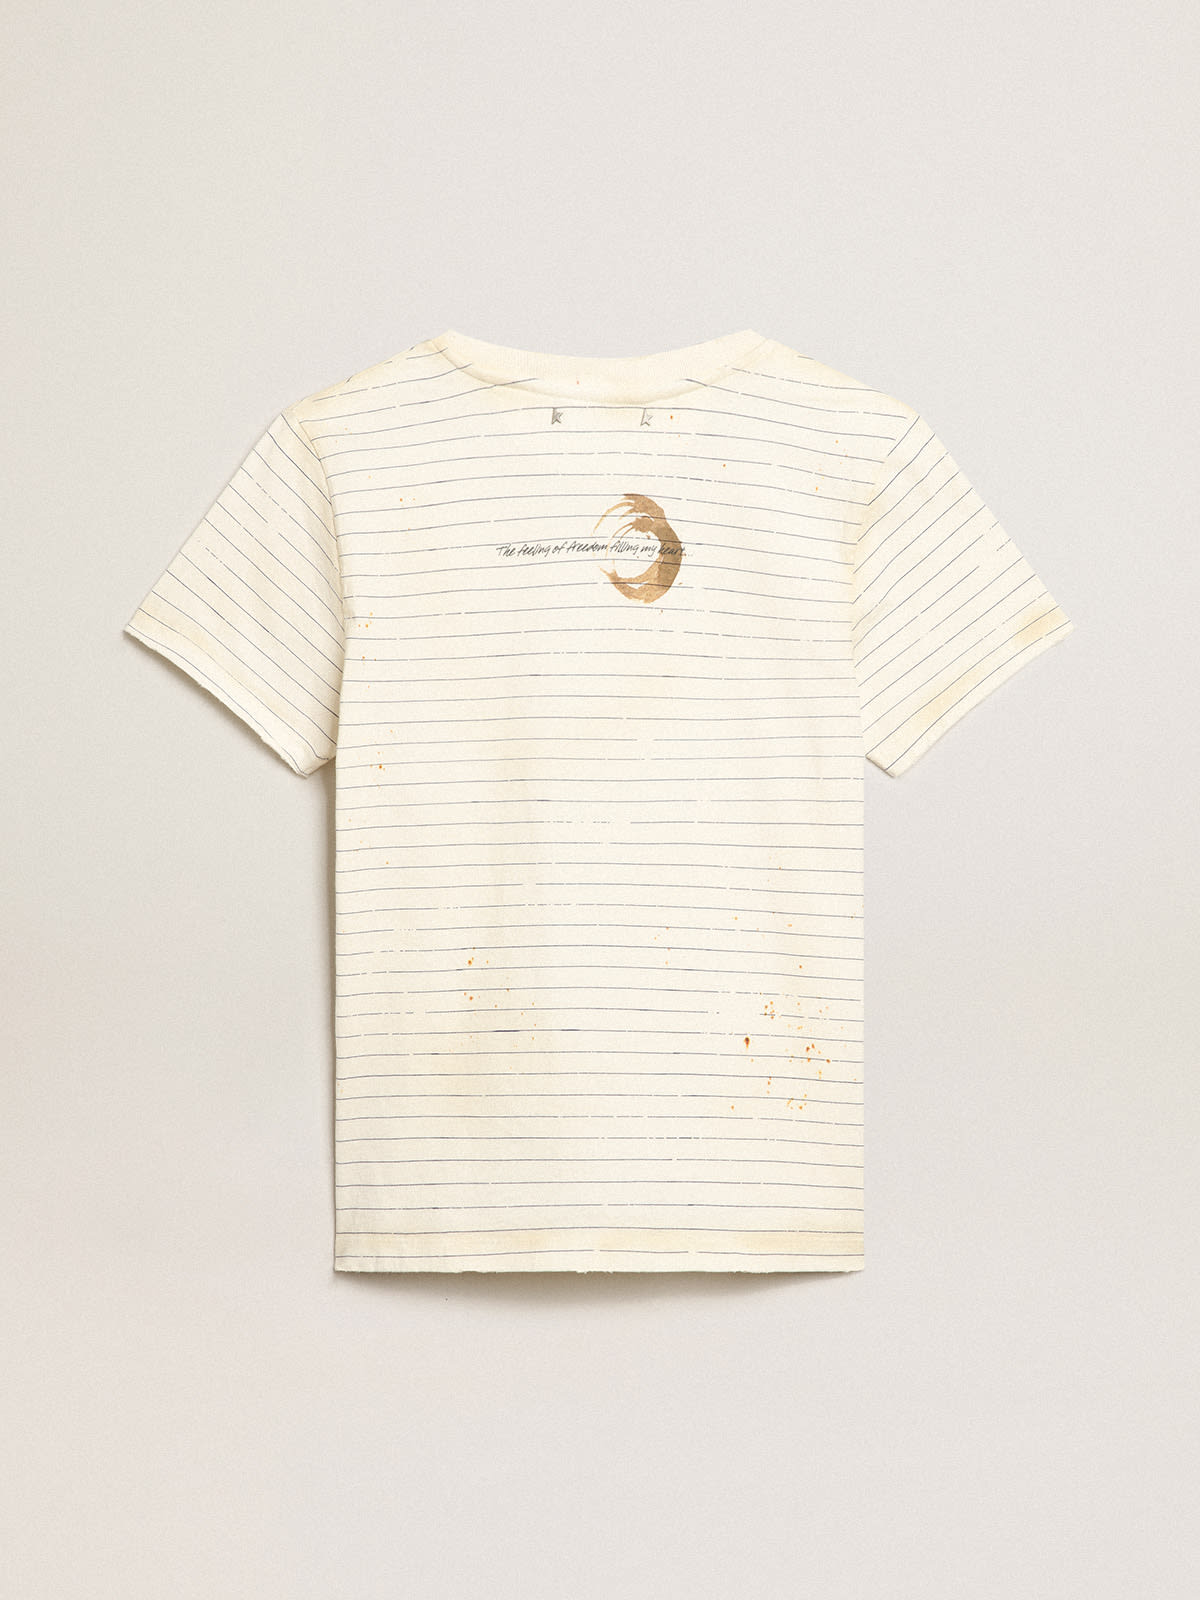 Golden Goose - T-shirt di colore bianco effetto notebook antico in 